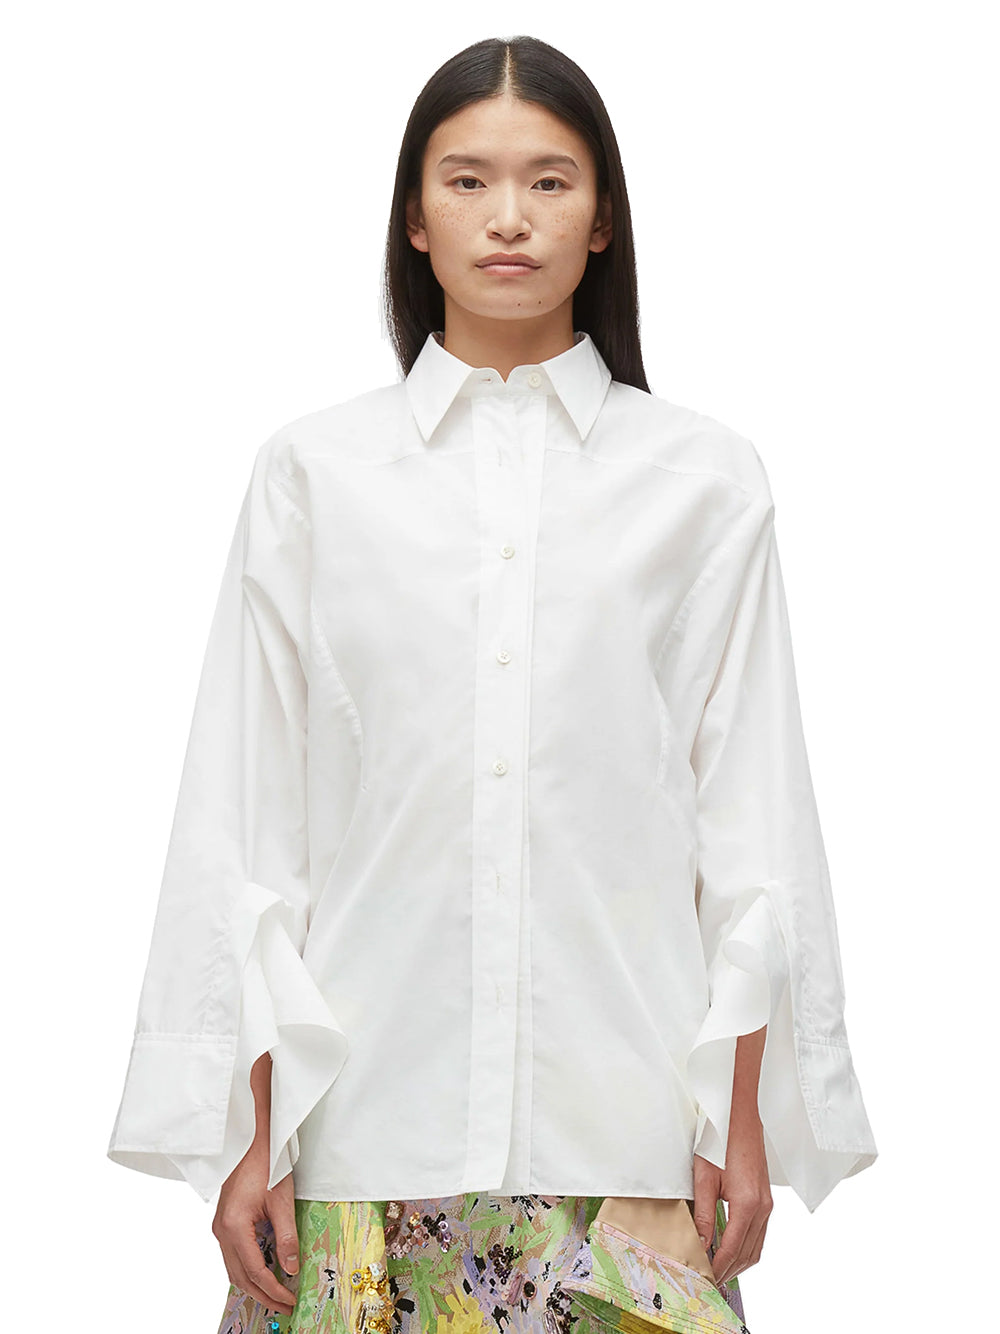 Oversize Shirt with Cascade Cuff (White)